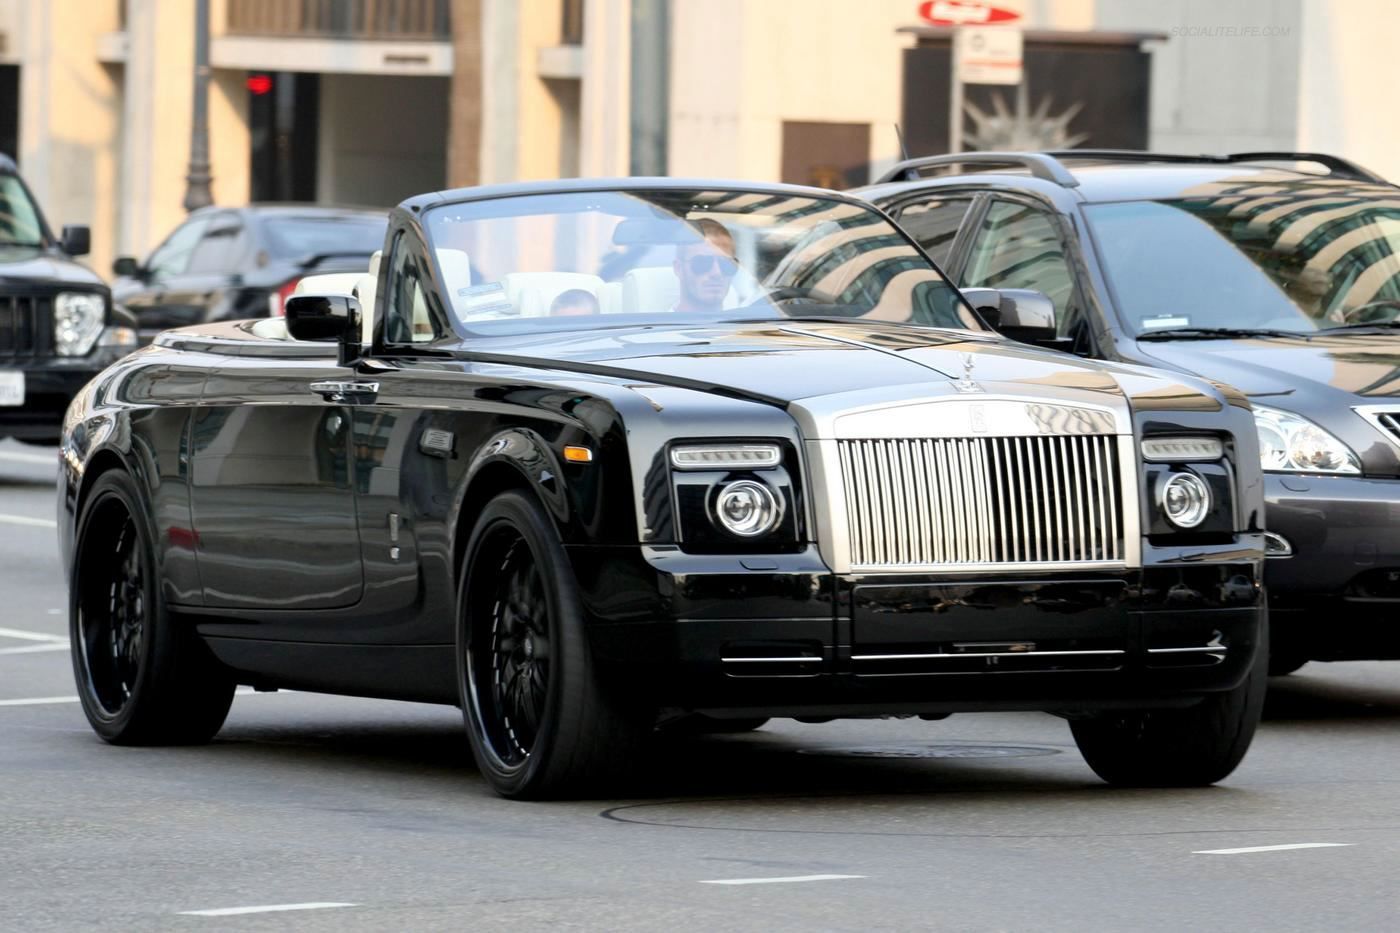 David Beckham's Rolls Royce DropHead Coupe